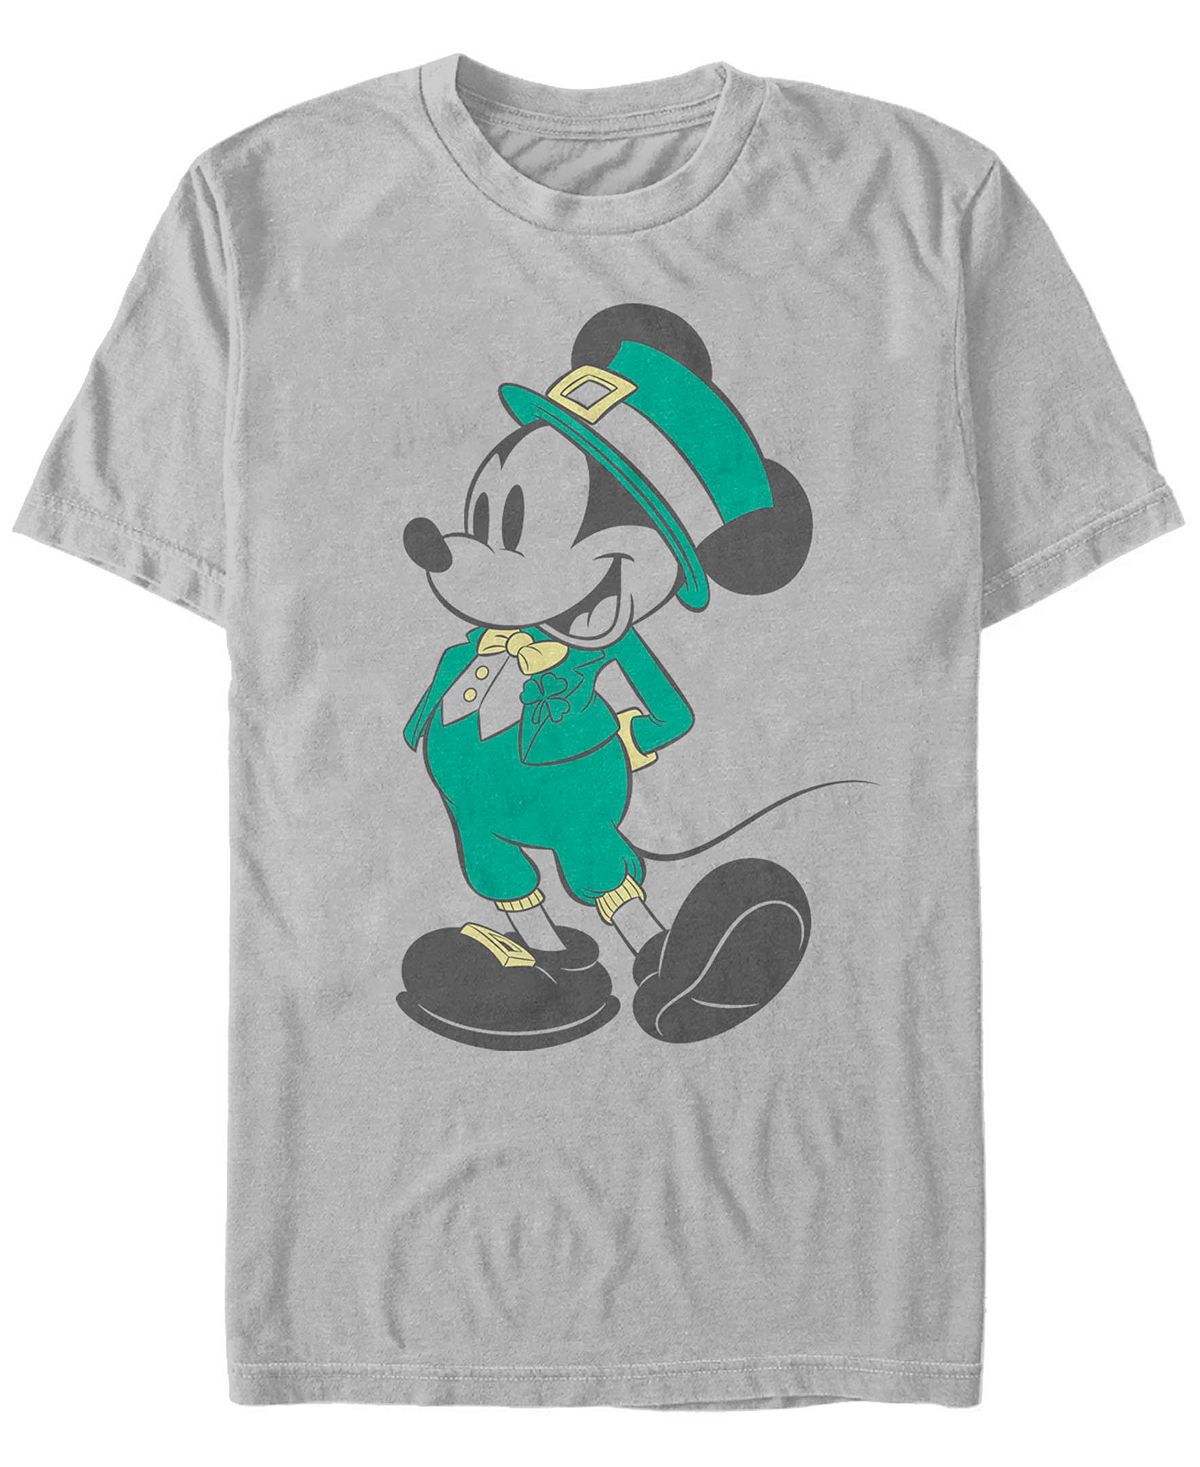 Мужская футболка с микки маусом classic leprechaun mickey с коротким рукавом Fifth Sun, мульти